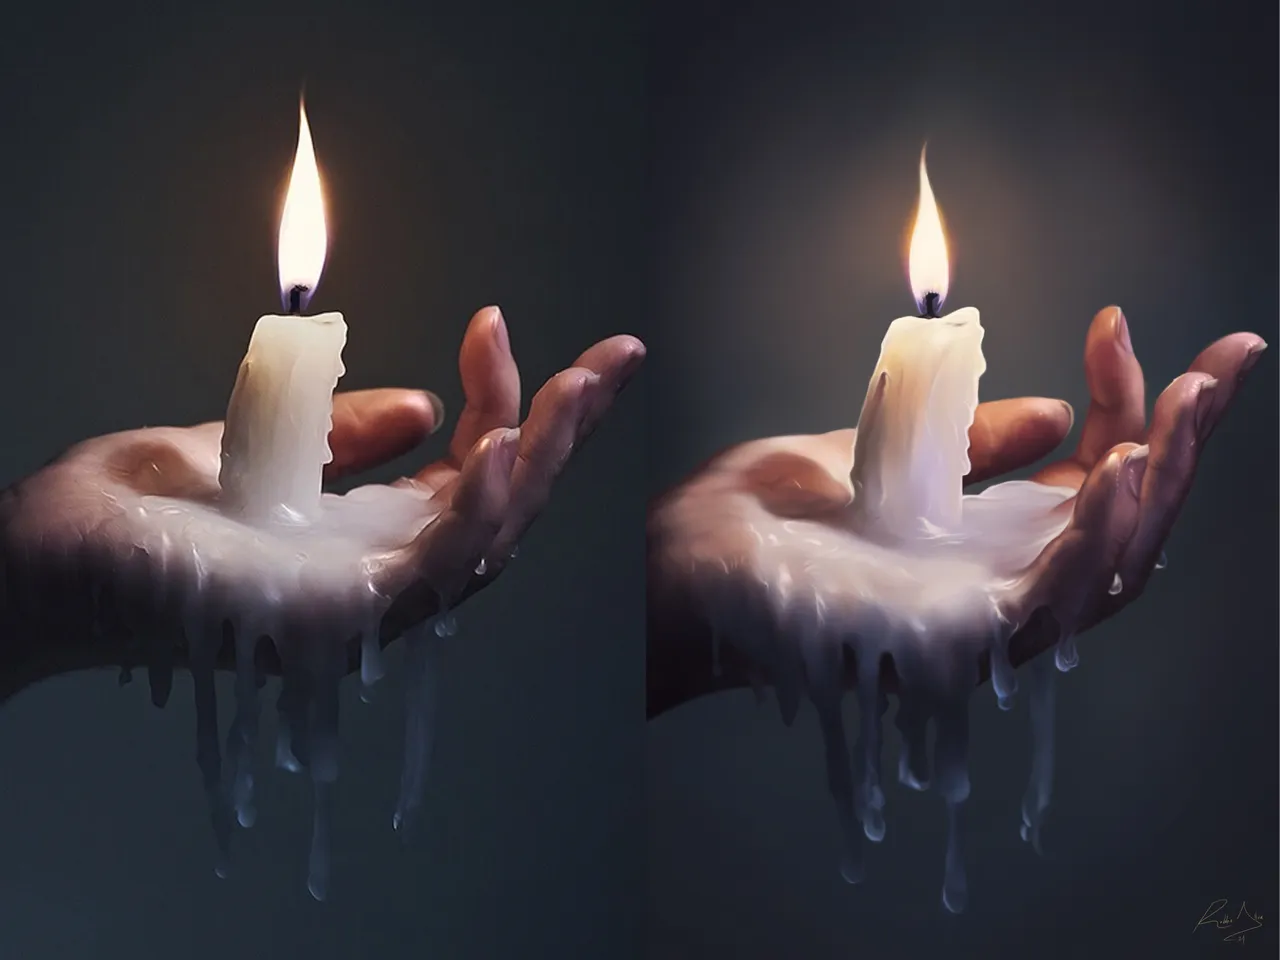 Candle-Painting-Comparison-robbieallenartist.jpg